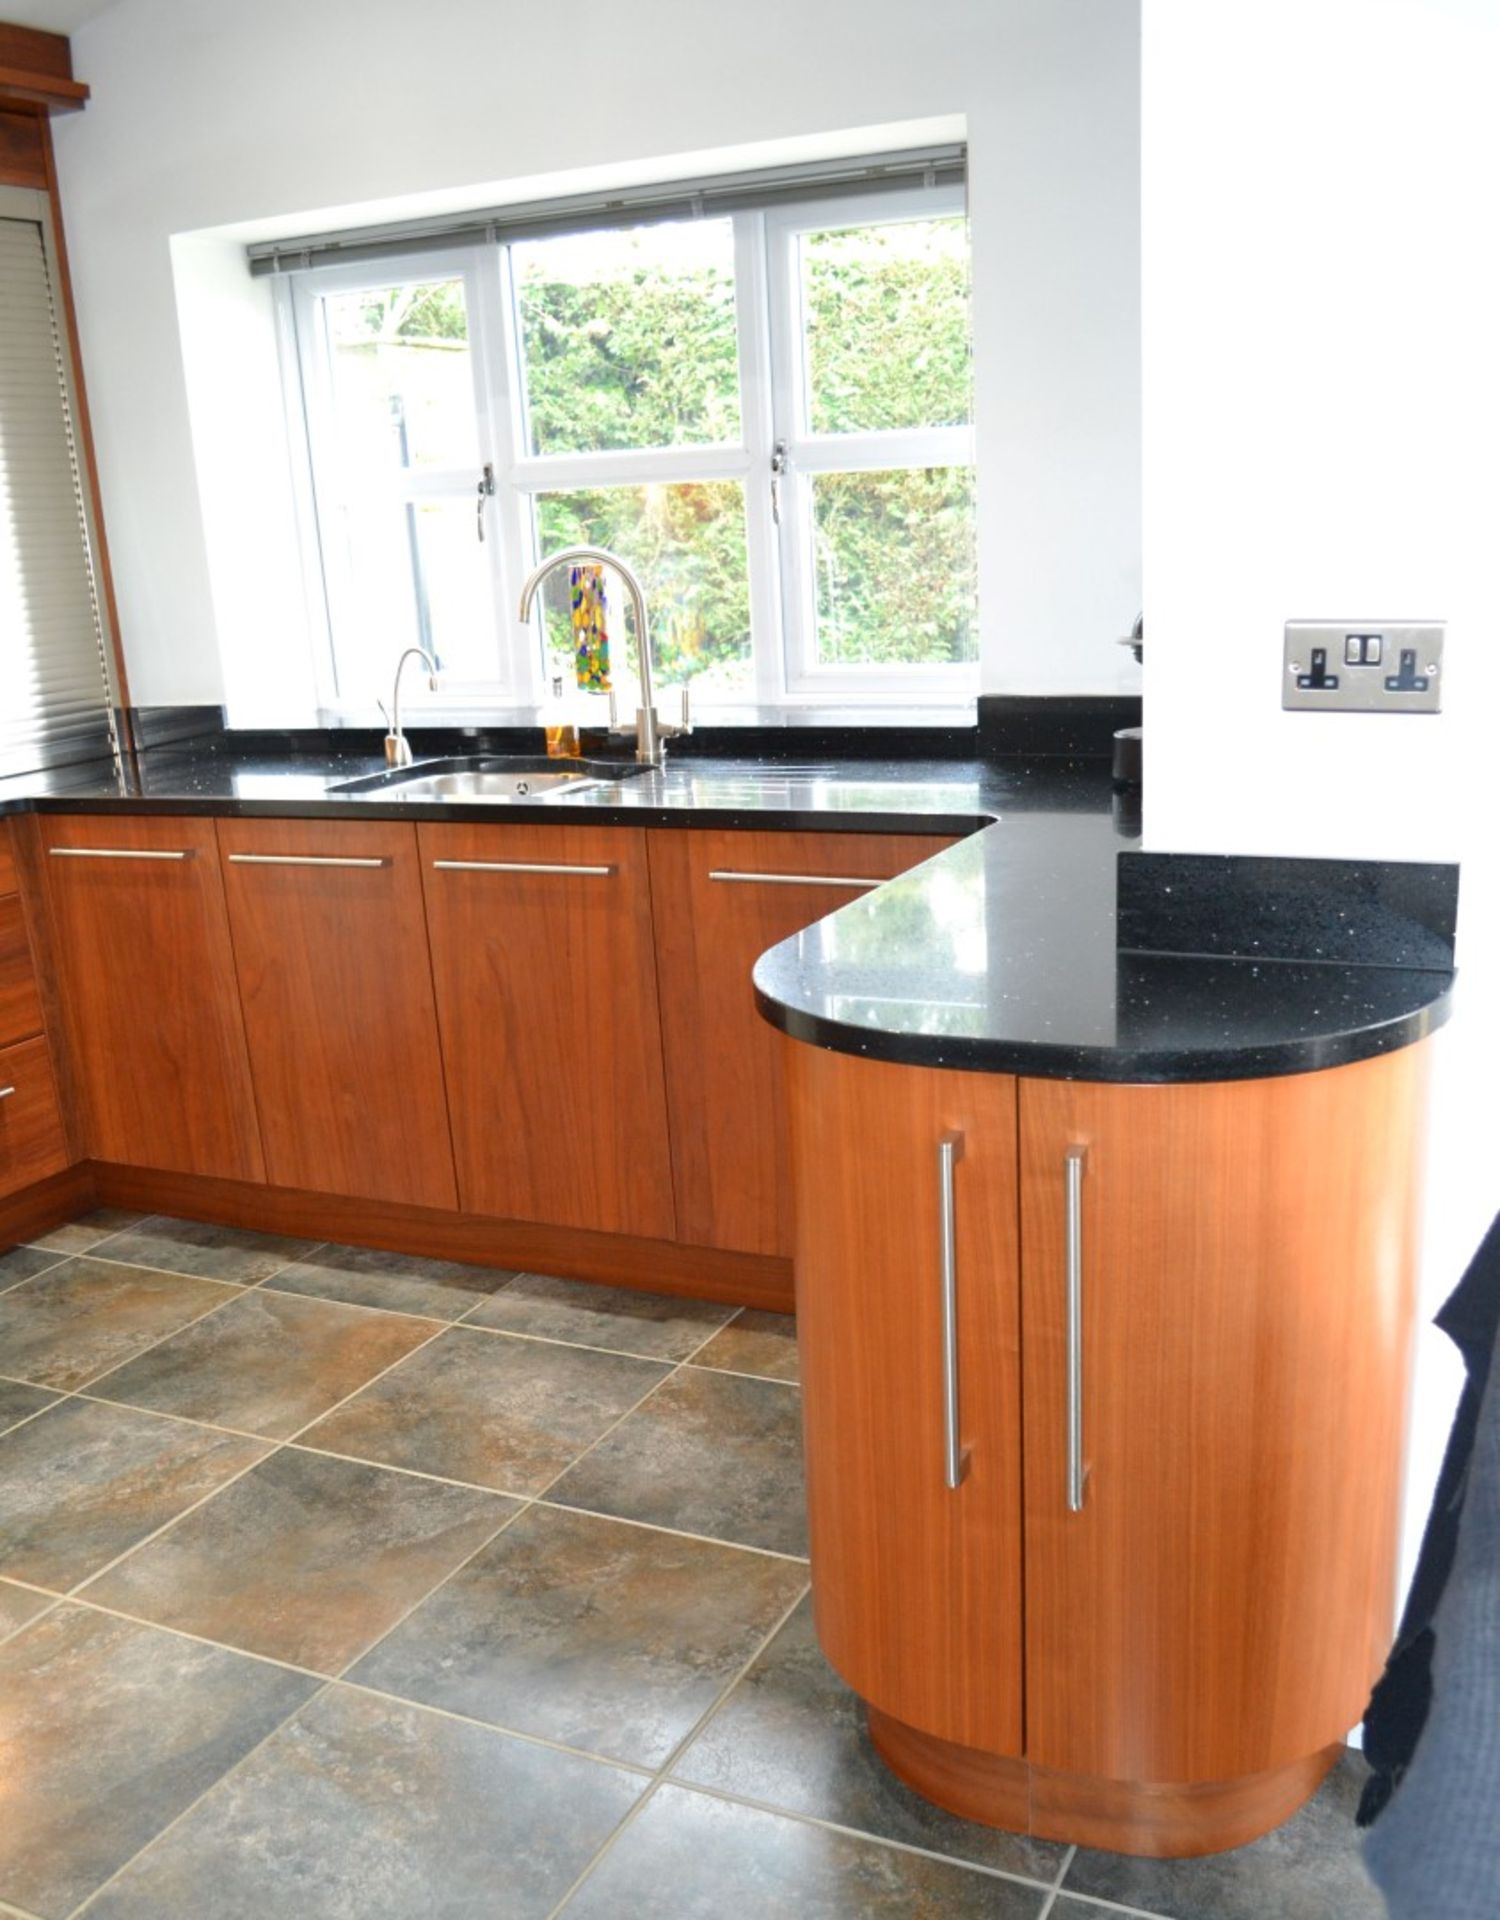 1 x Kitchen Design Bespoke Fitted Kitchen With Silestone Worktops & Neff Appliances - Superb - Image 9 of 59